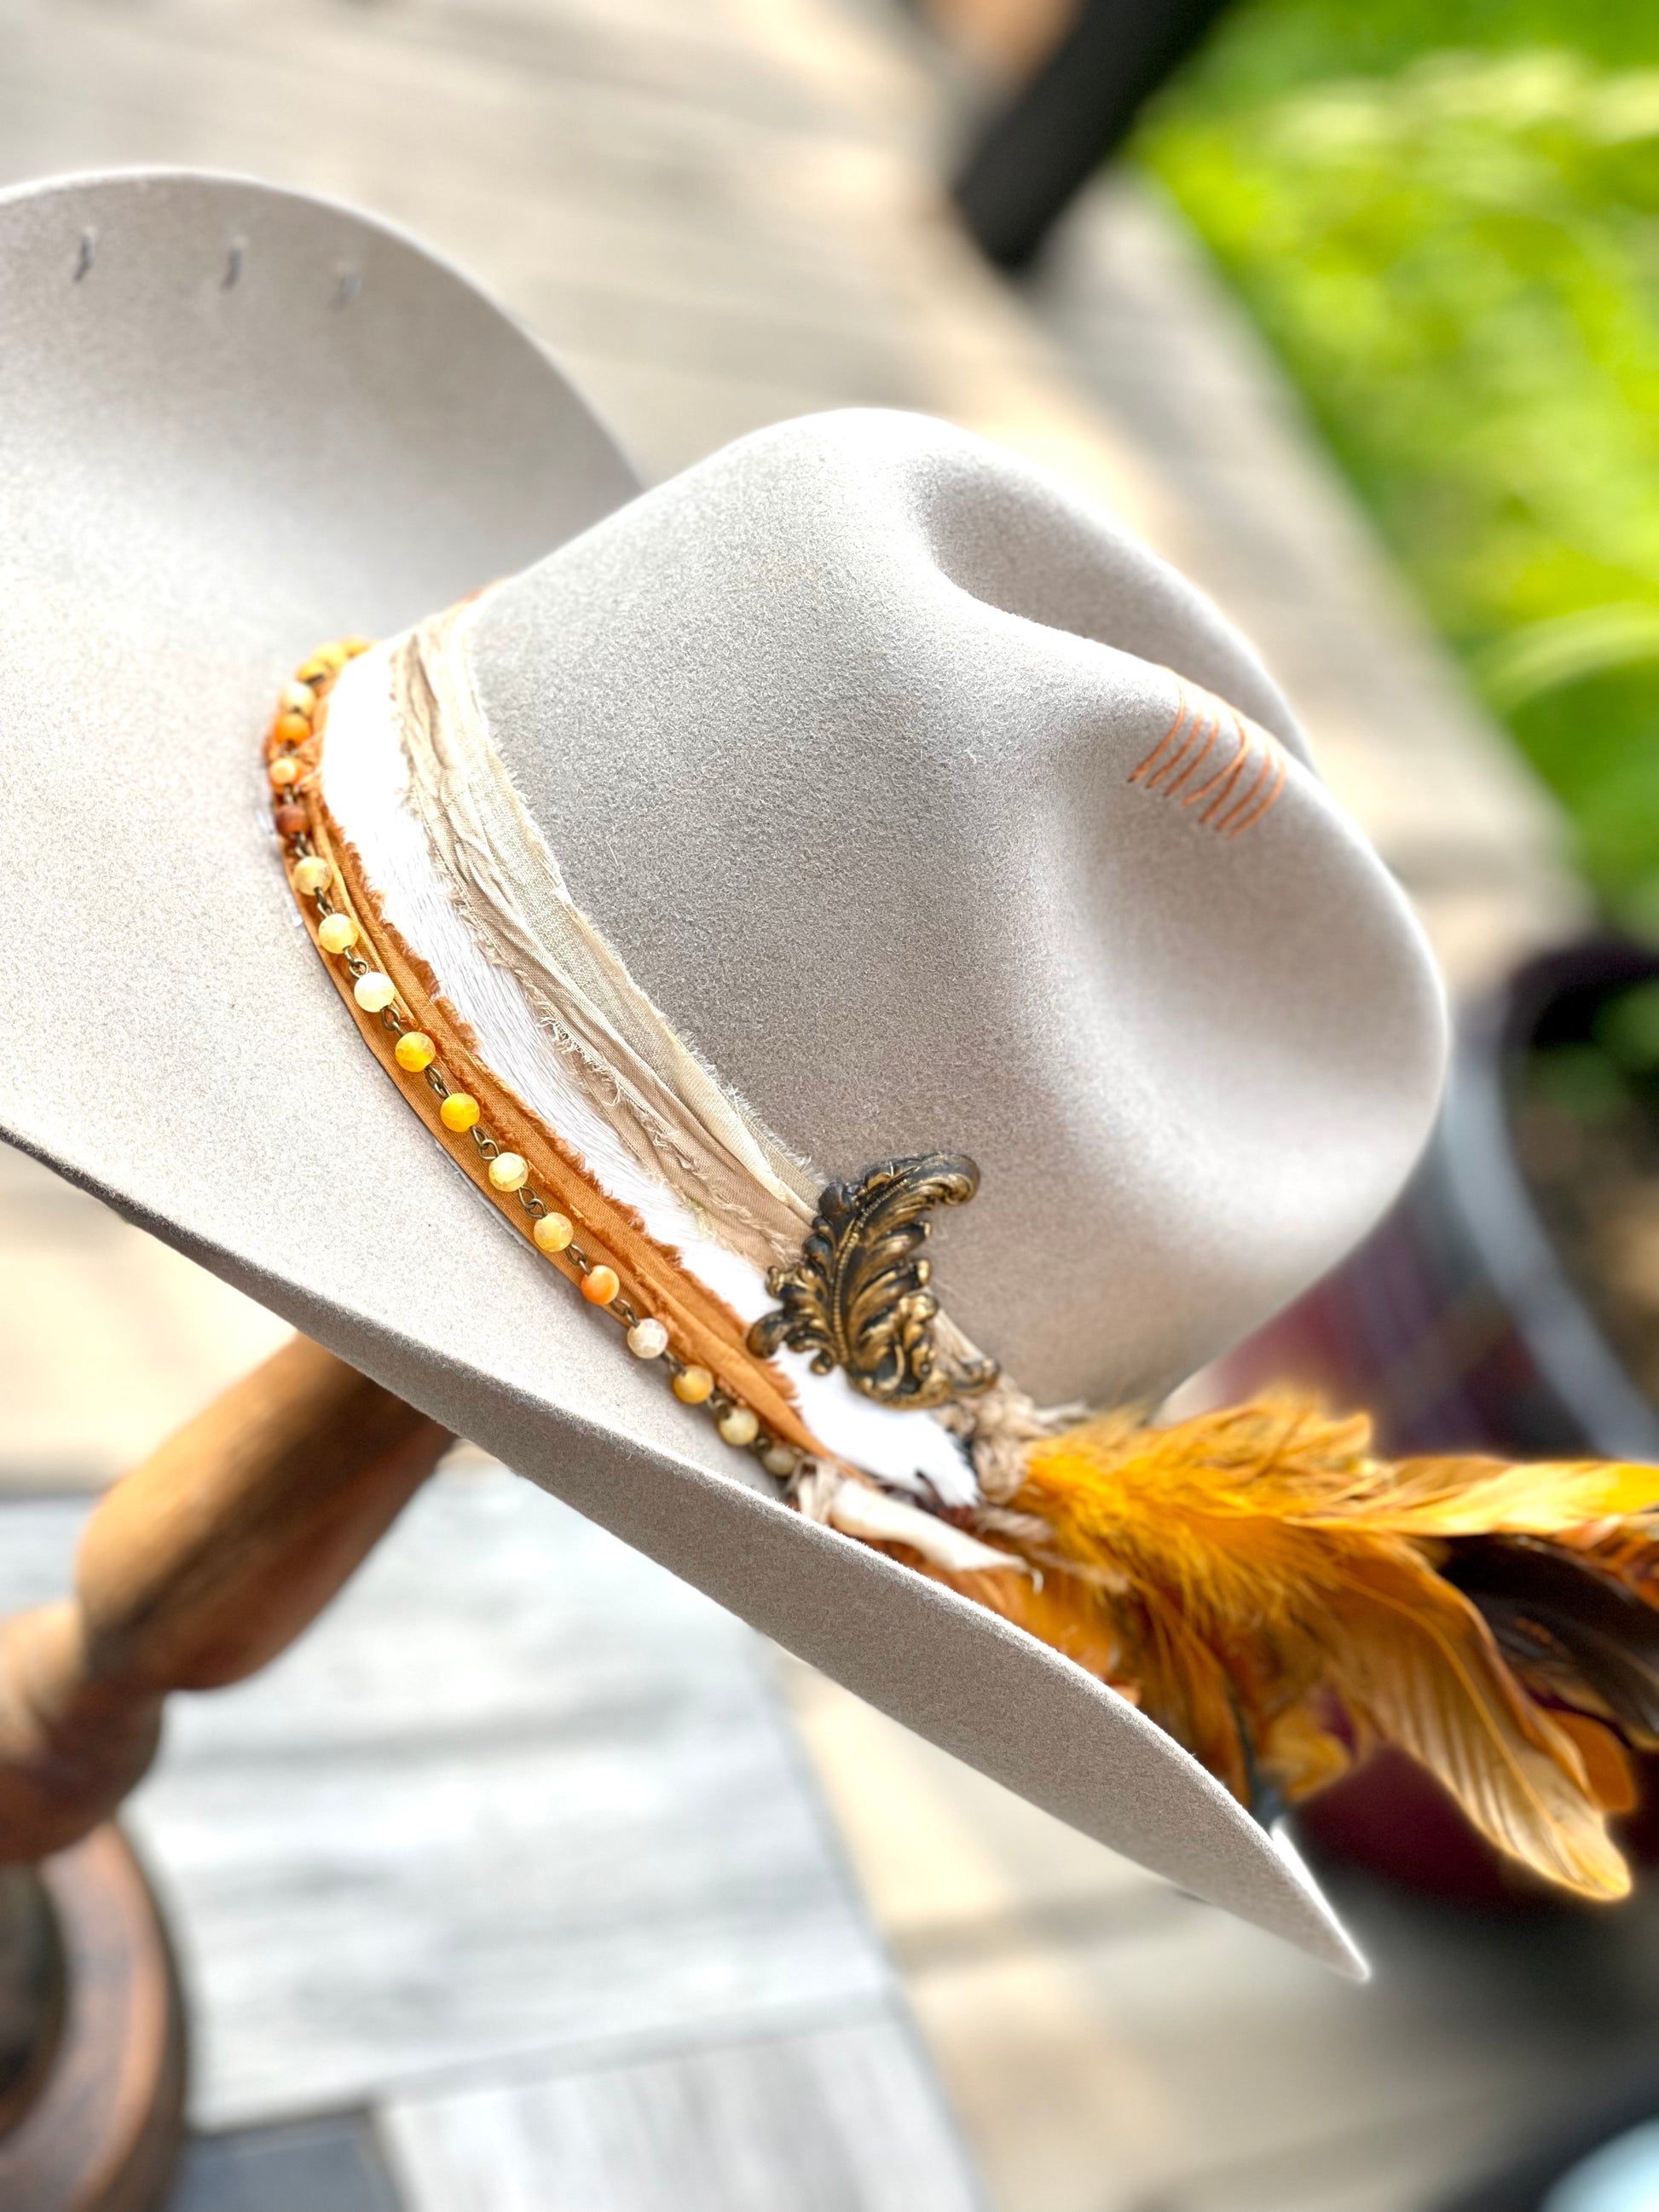 Customized Cowboy Hat - The Gaslight